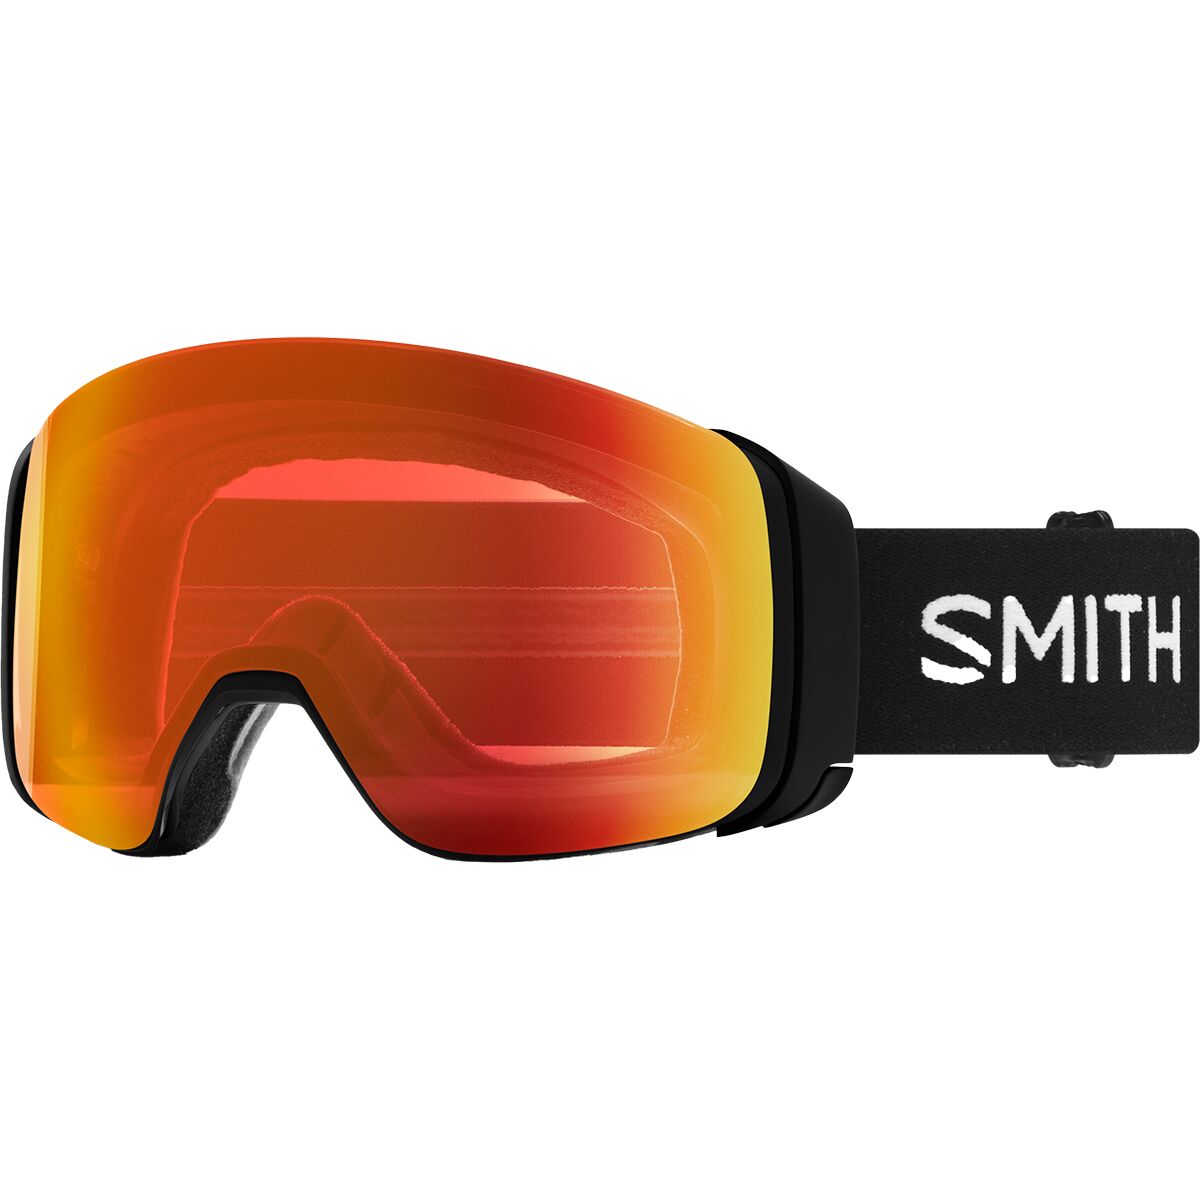 Smith 4D MAG ChromaPop Goggles